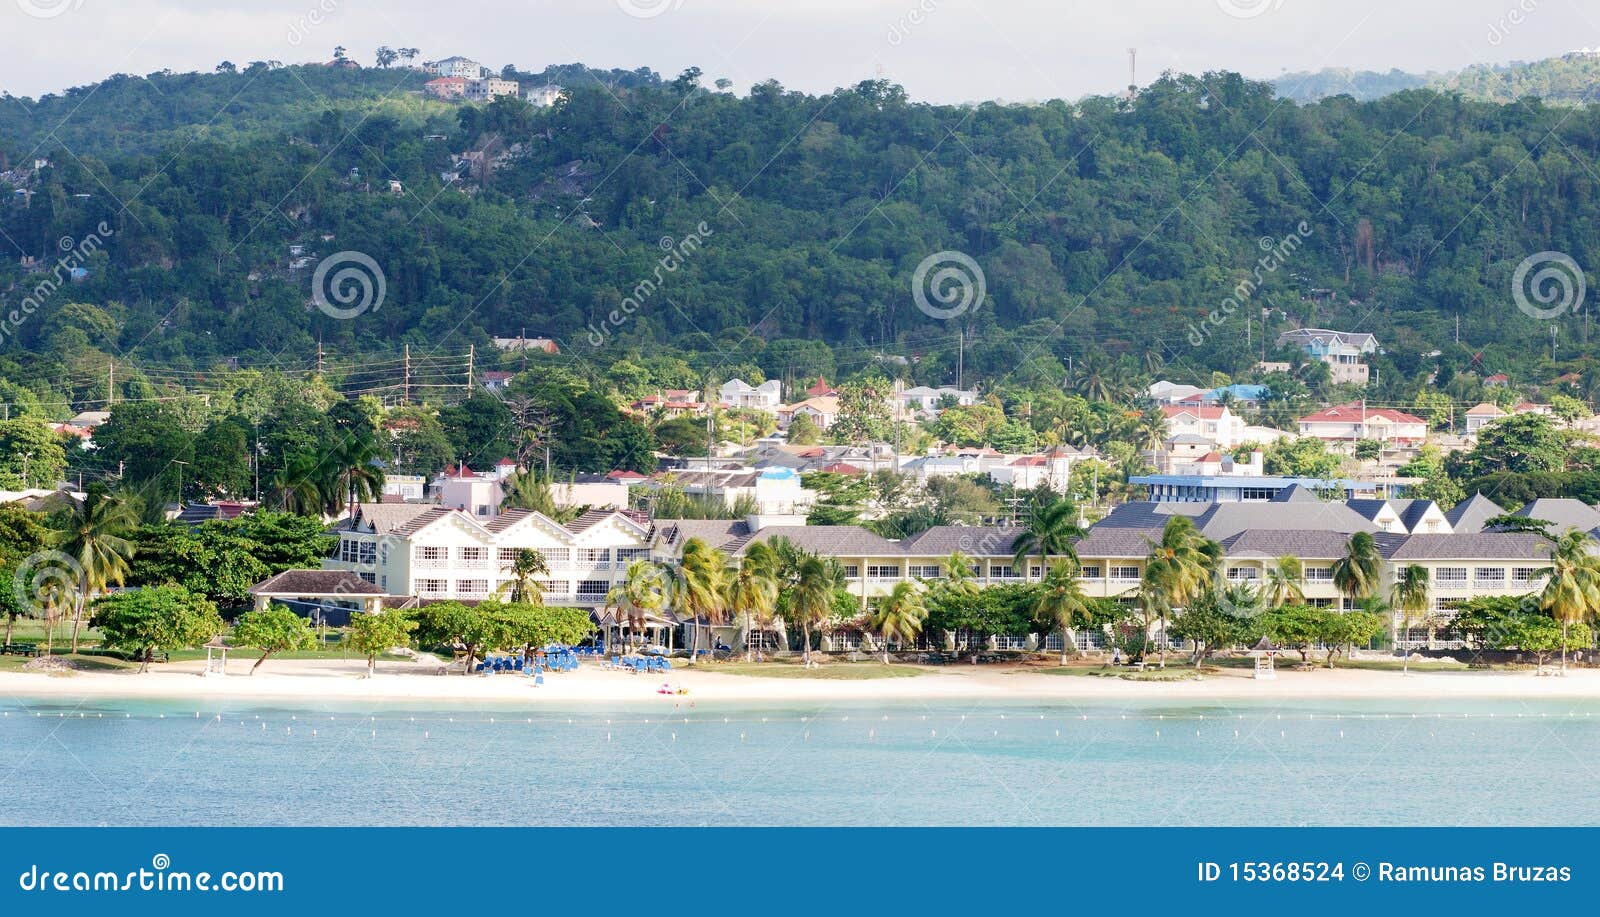 jamaica's resorts